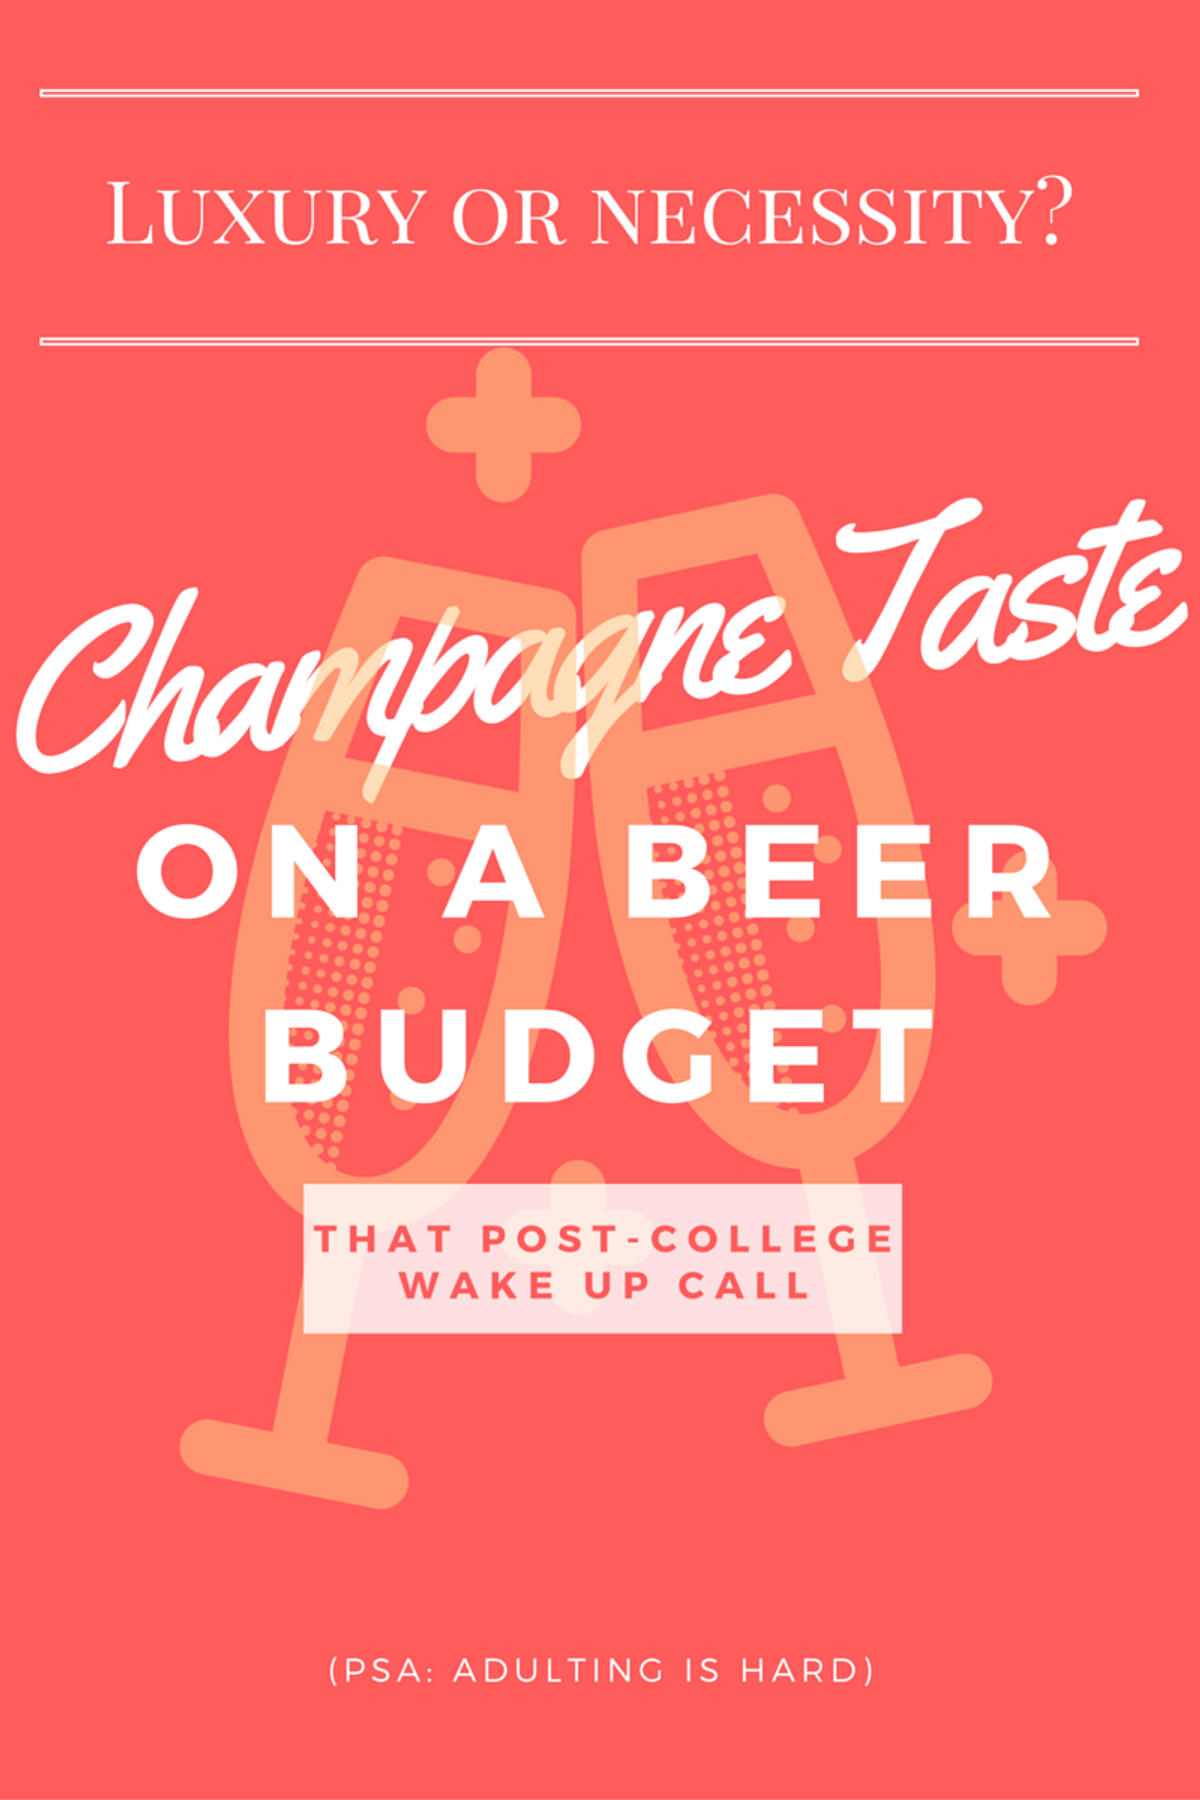 Champagne Taste On A Beer Budget